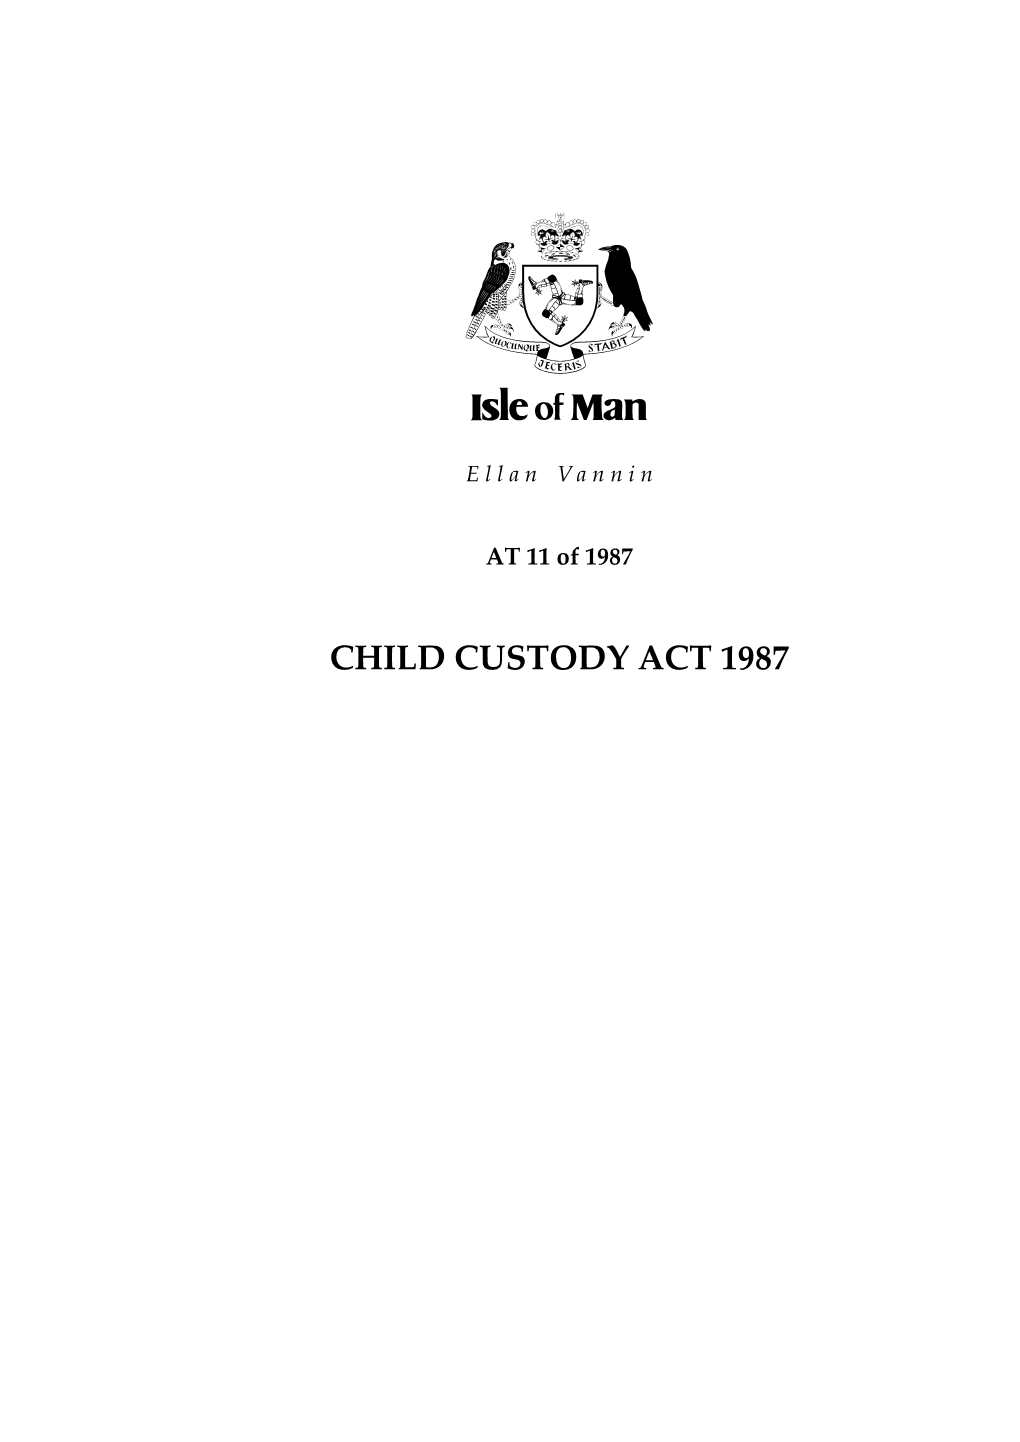 Child Custody Act 1987